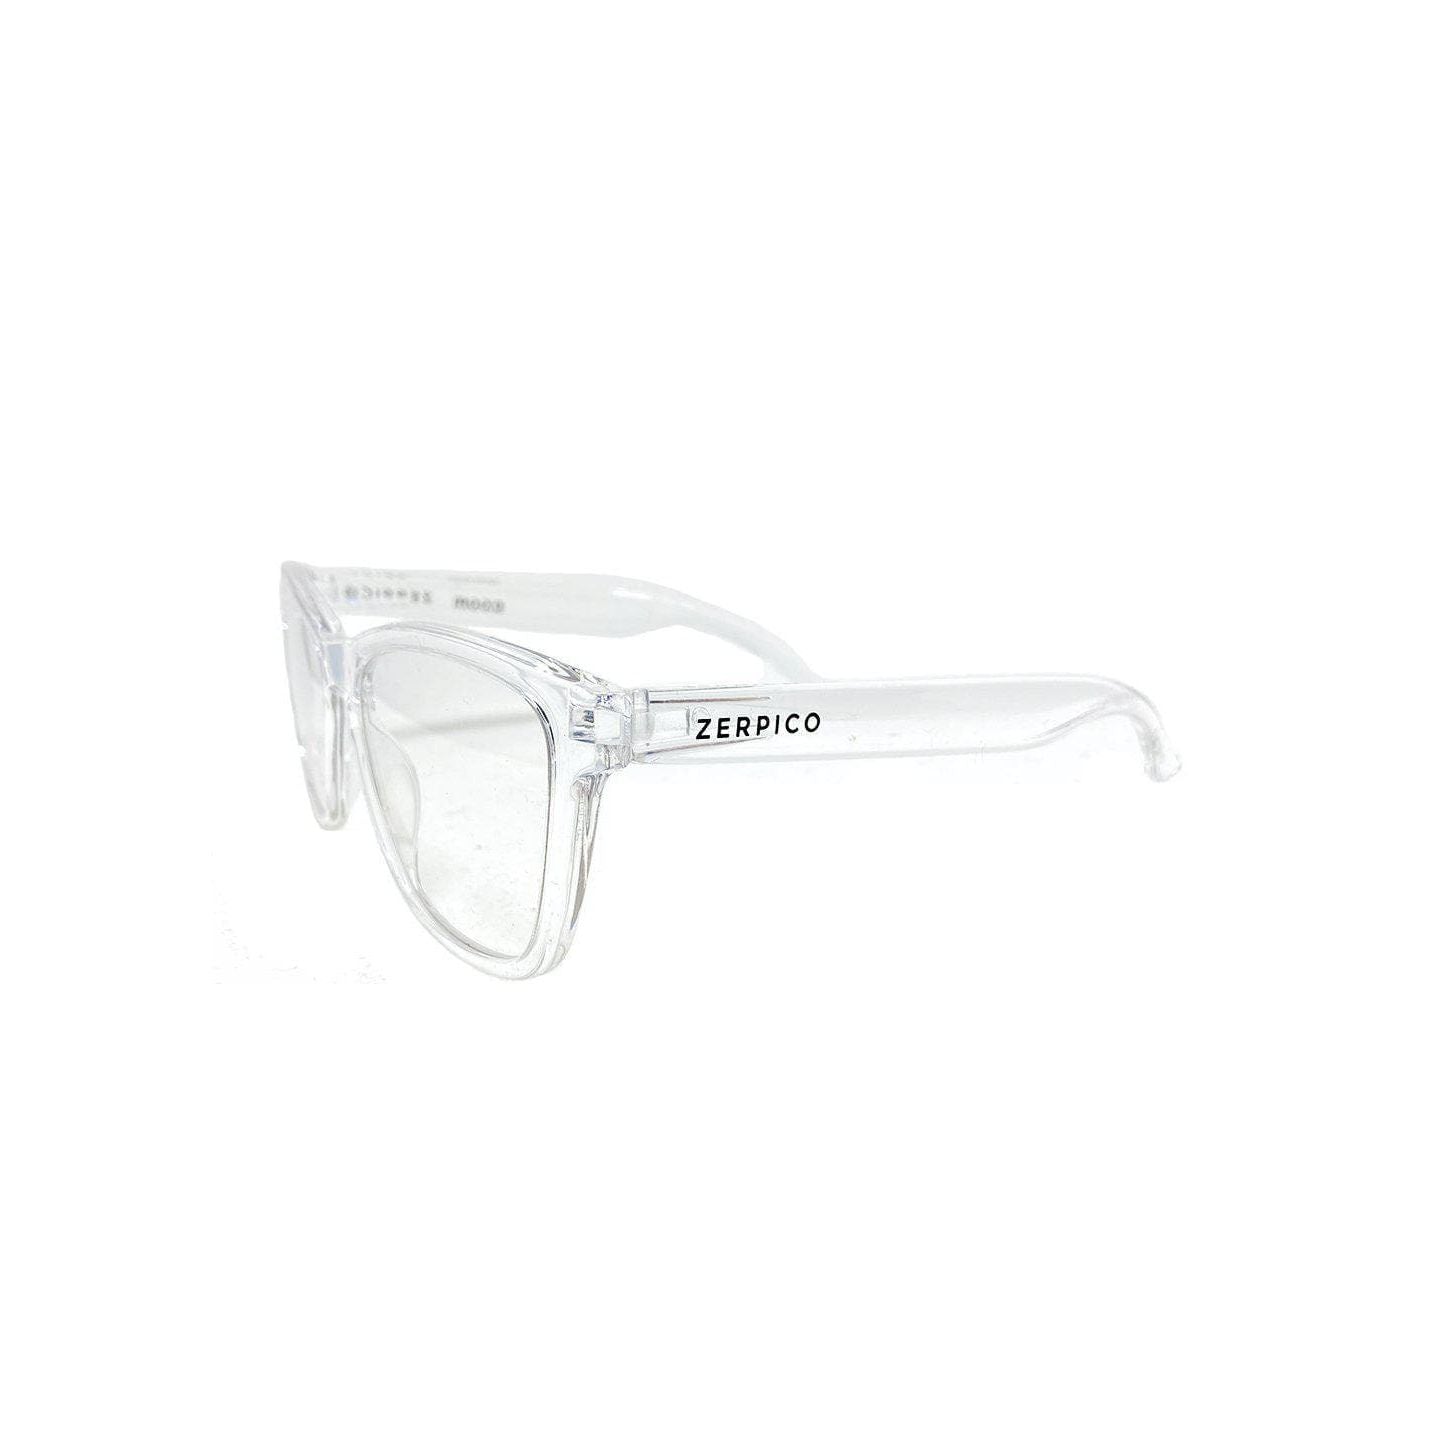 Nexus - Bluelight - Yang Sunglasses - KME means the very best